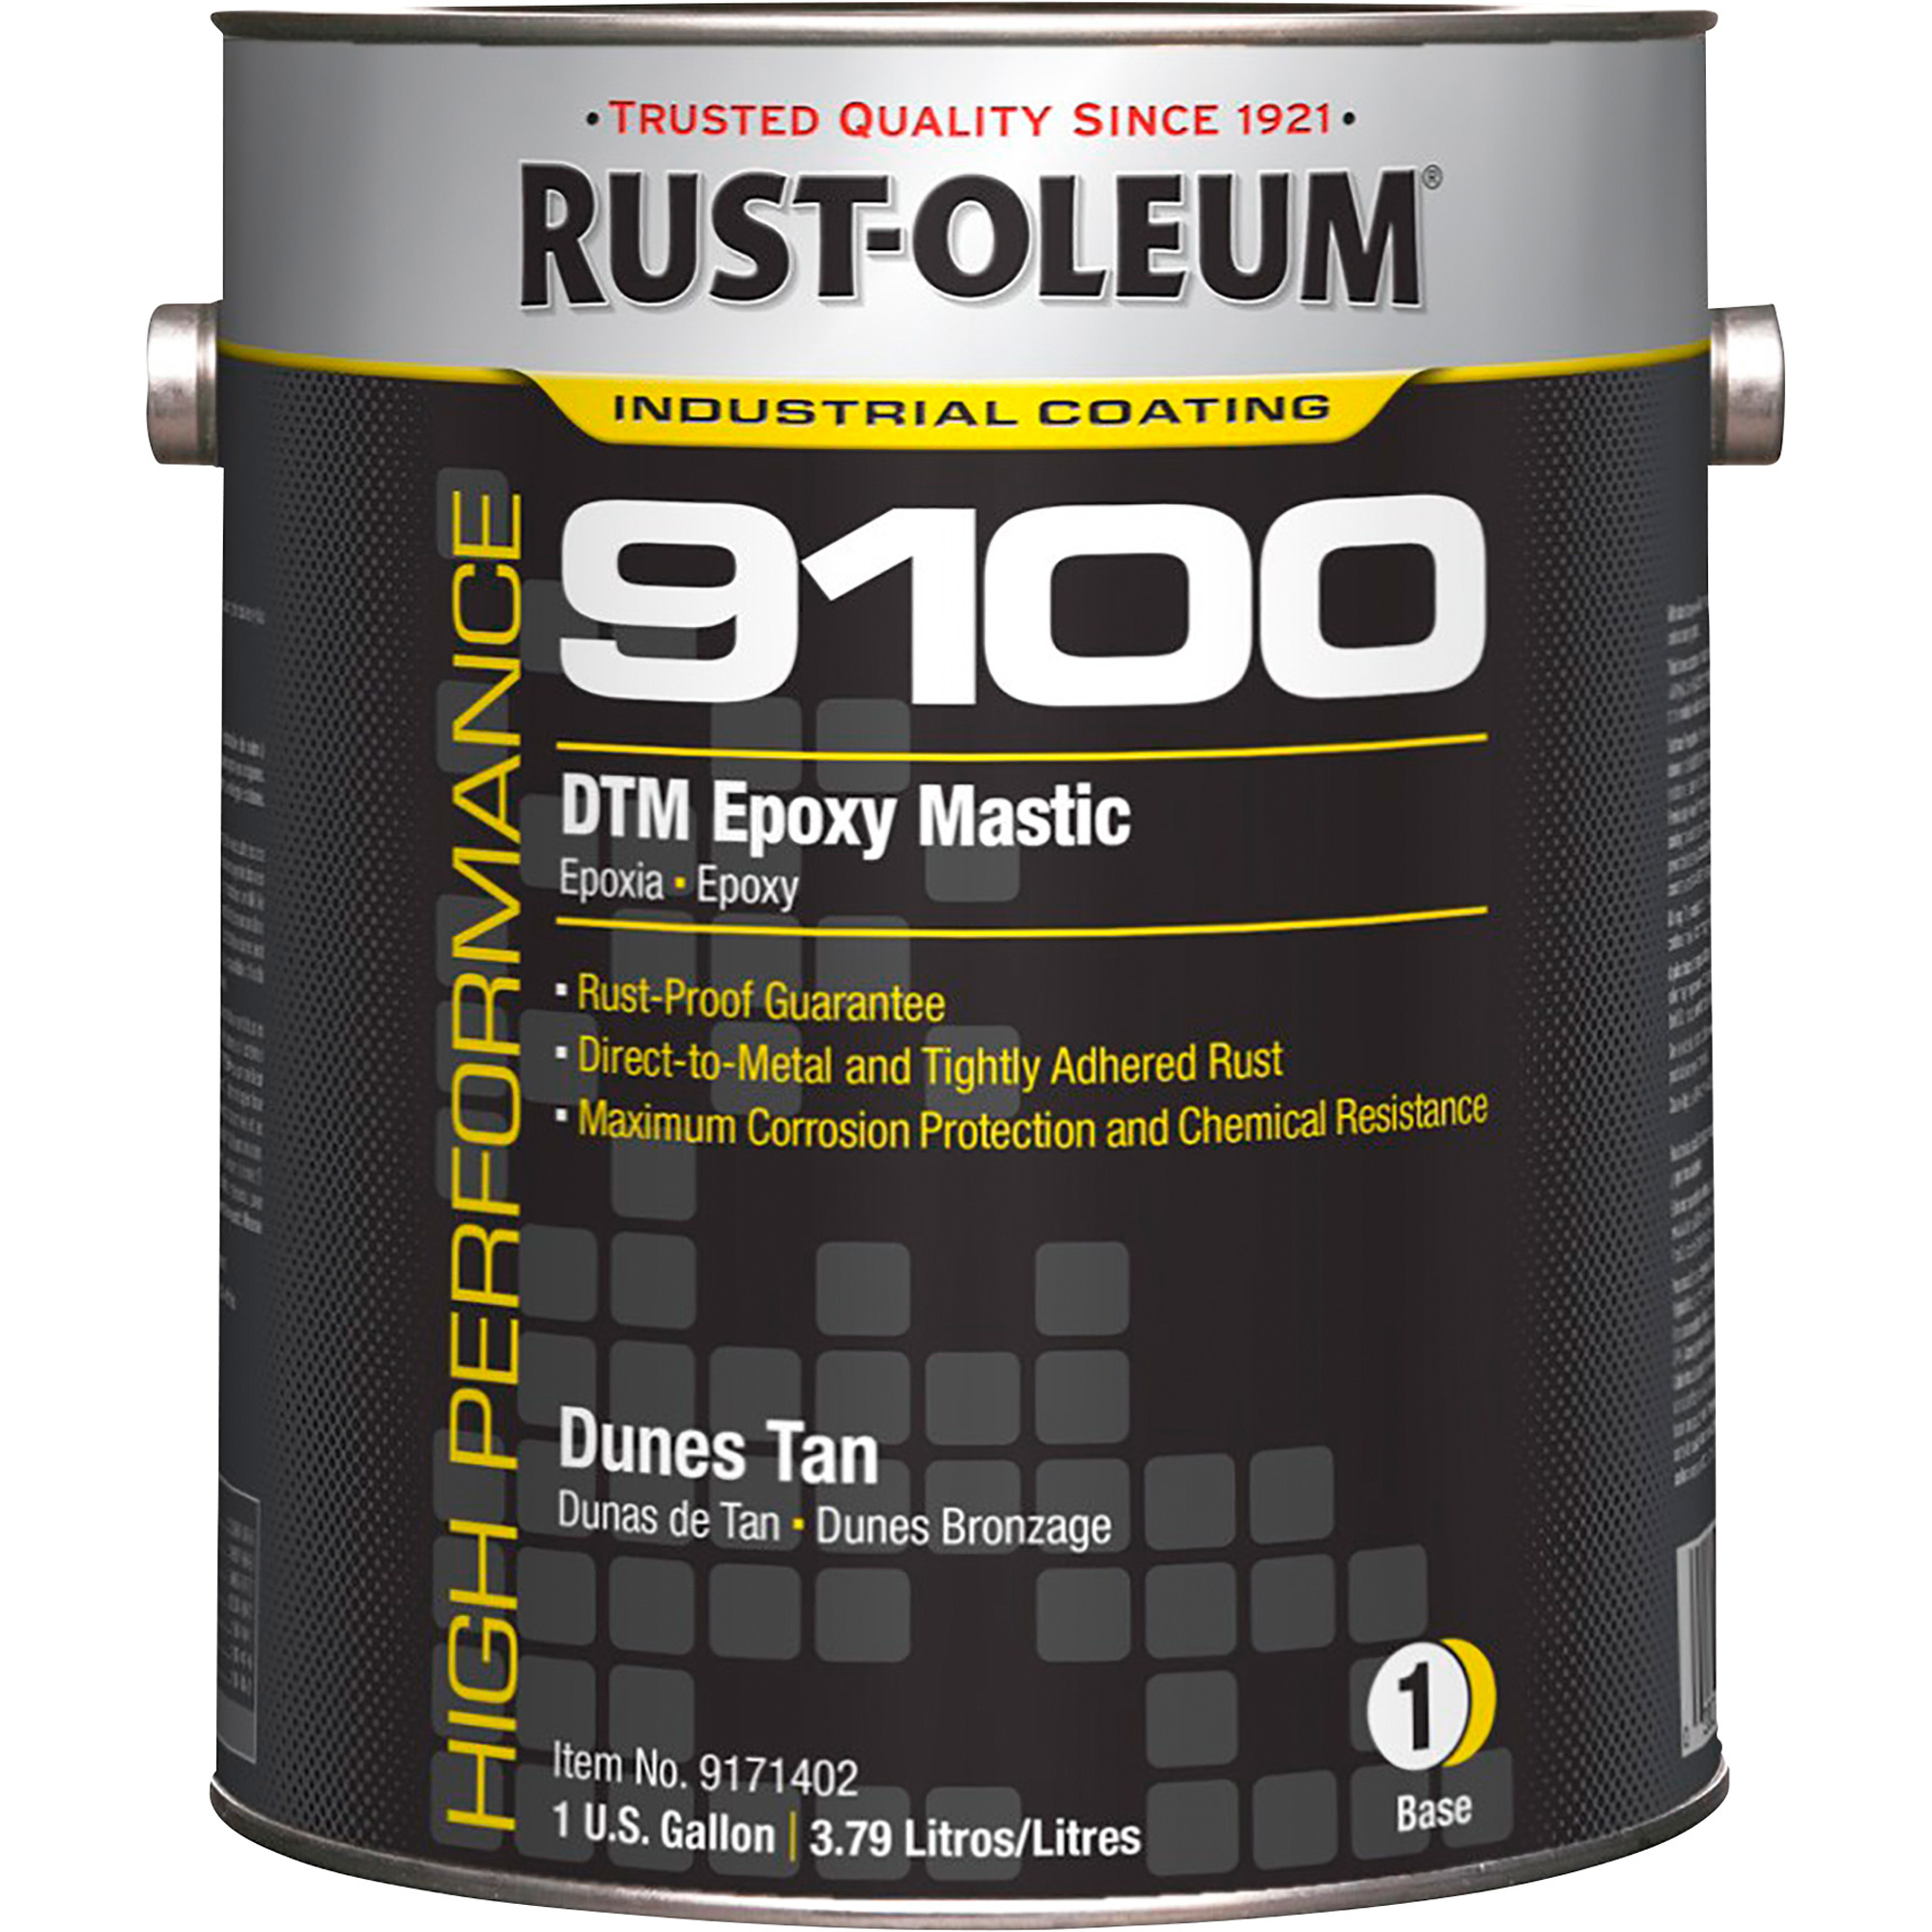 Rust-Oleum 9100 Epoxy, (1) 5-Gallon Pail, Dunes Tan